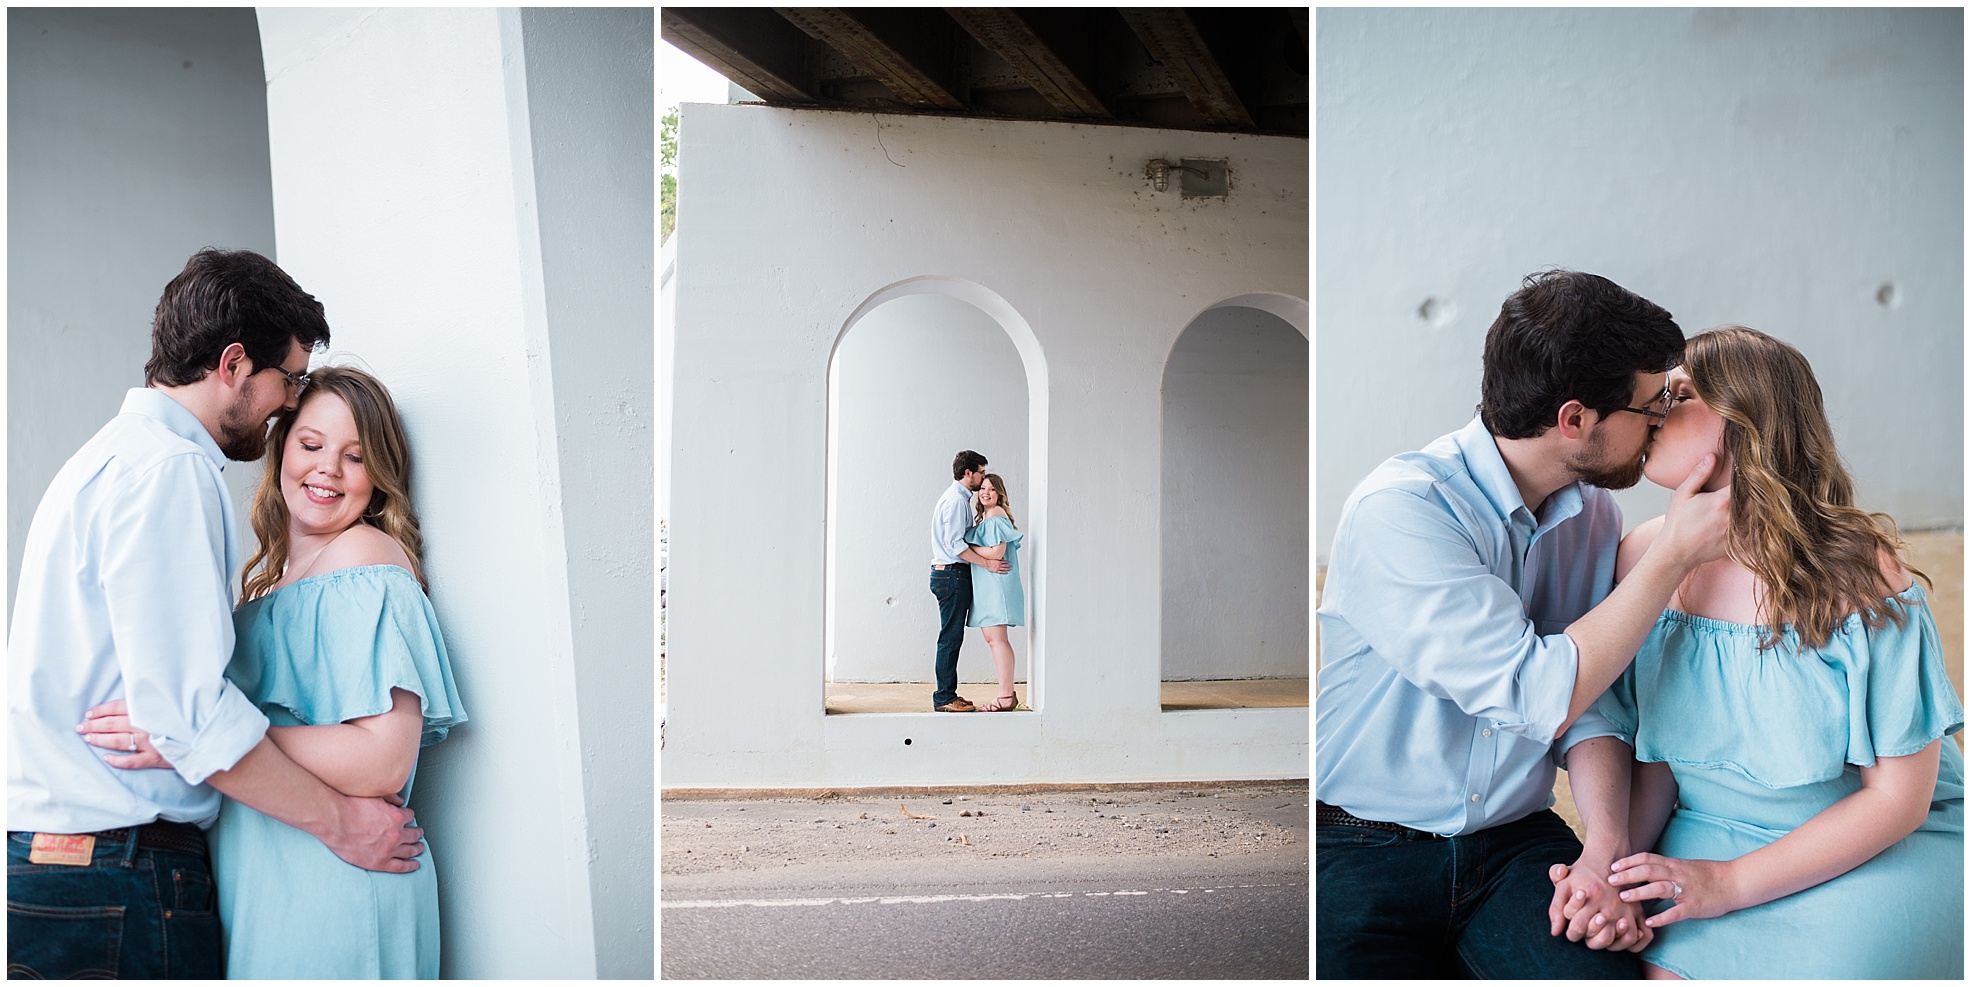 Bromleigh & Jzyk | Alabama Wedding Photographer | Engagement Session | Vincent, AL 